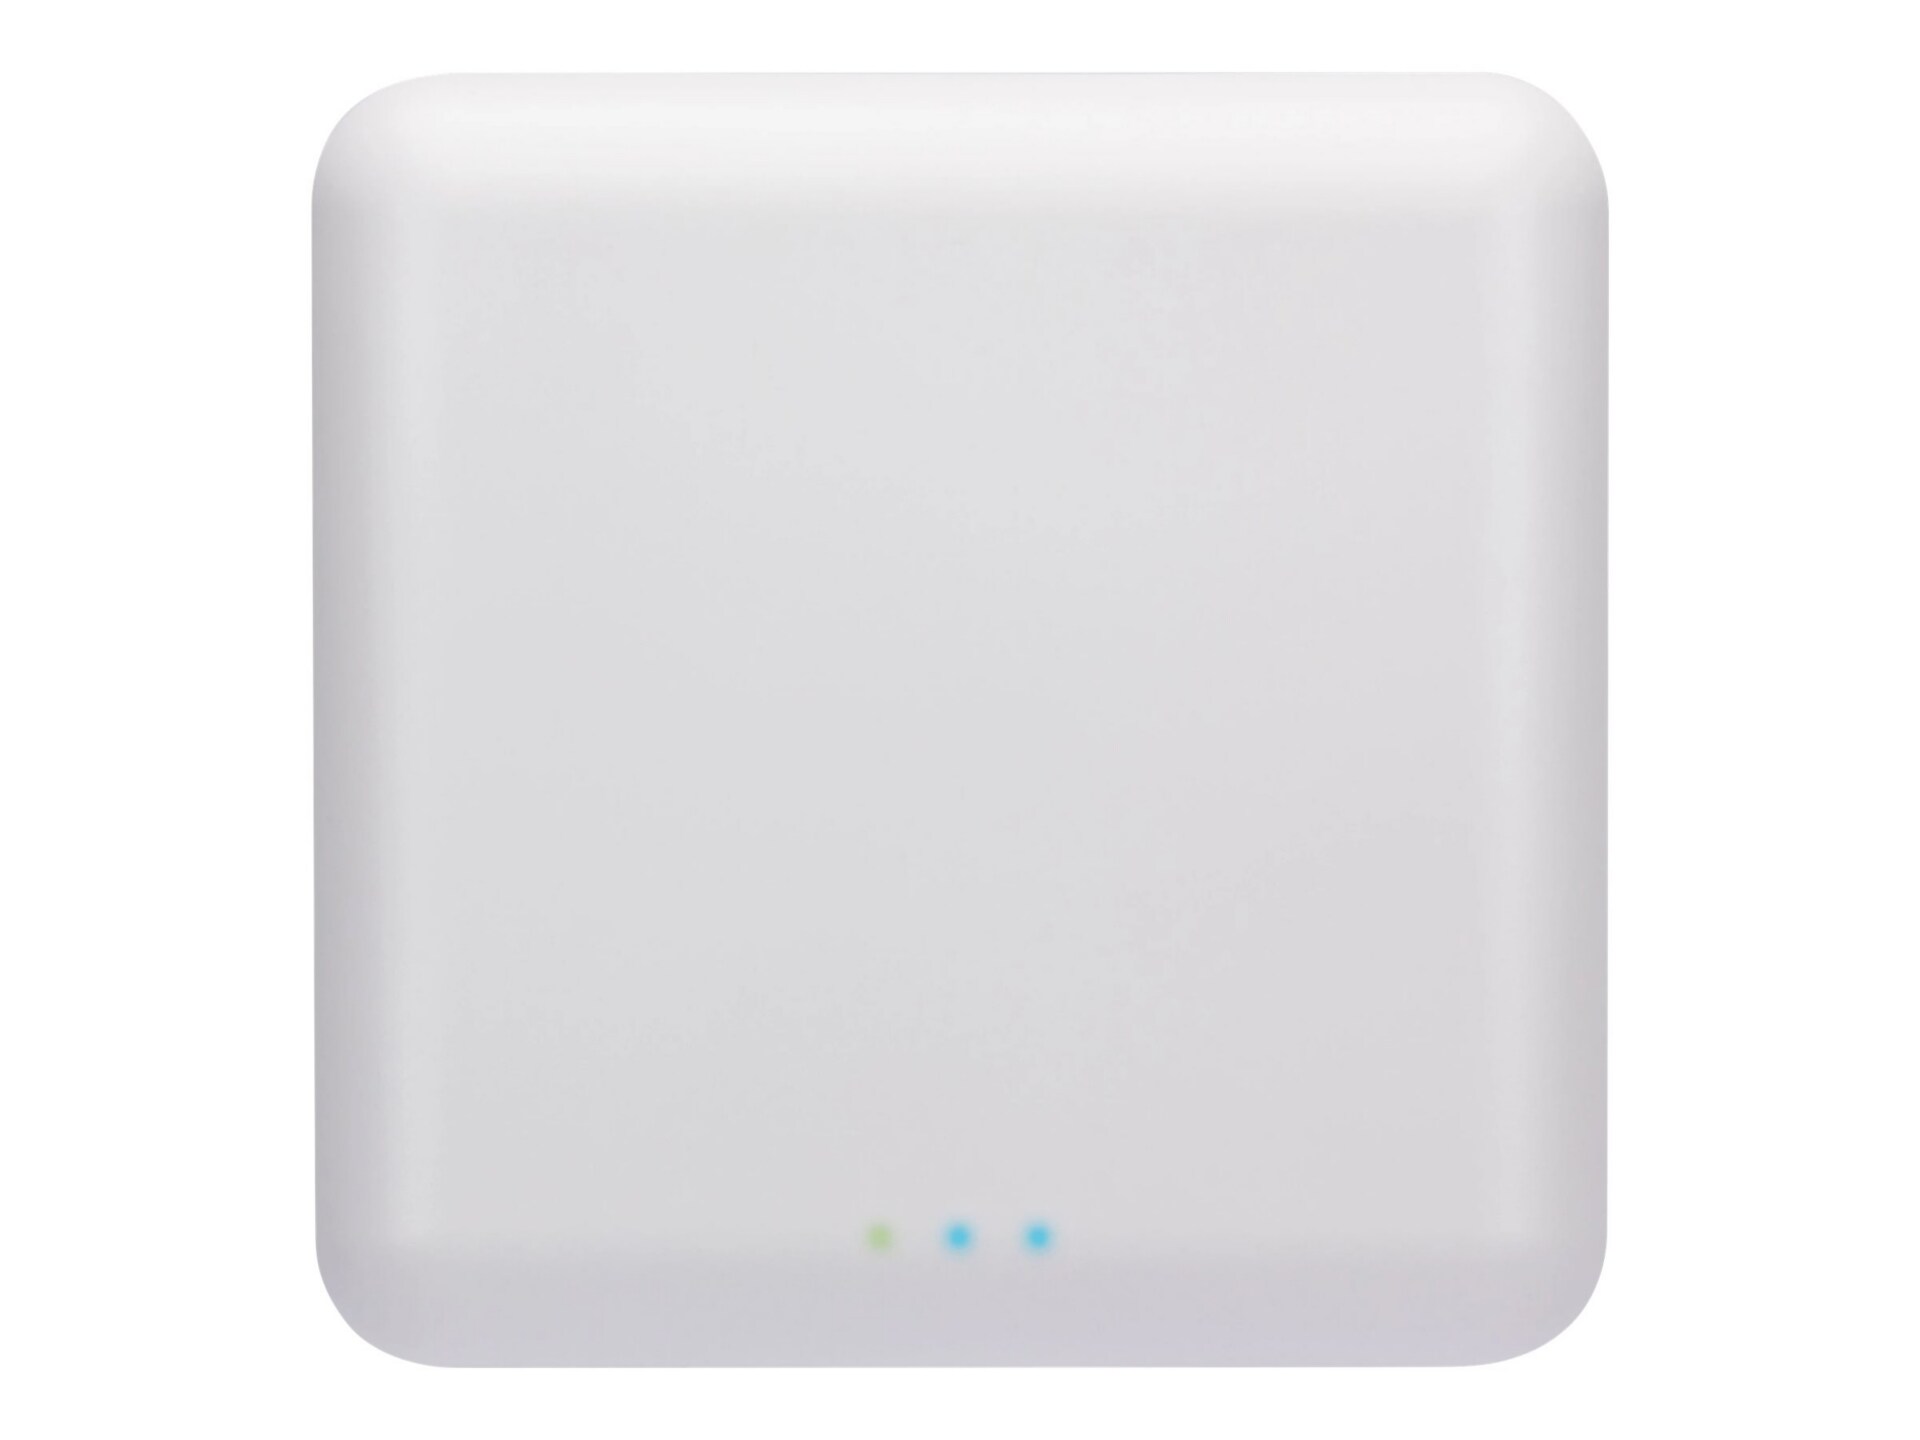 Luxul Apex Series XAP-1610 - borne d'accès sans fil - Wi-Fi 5, Wi-Fi 5